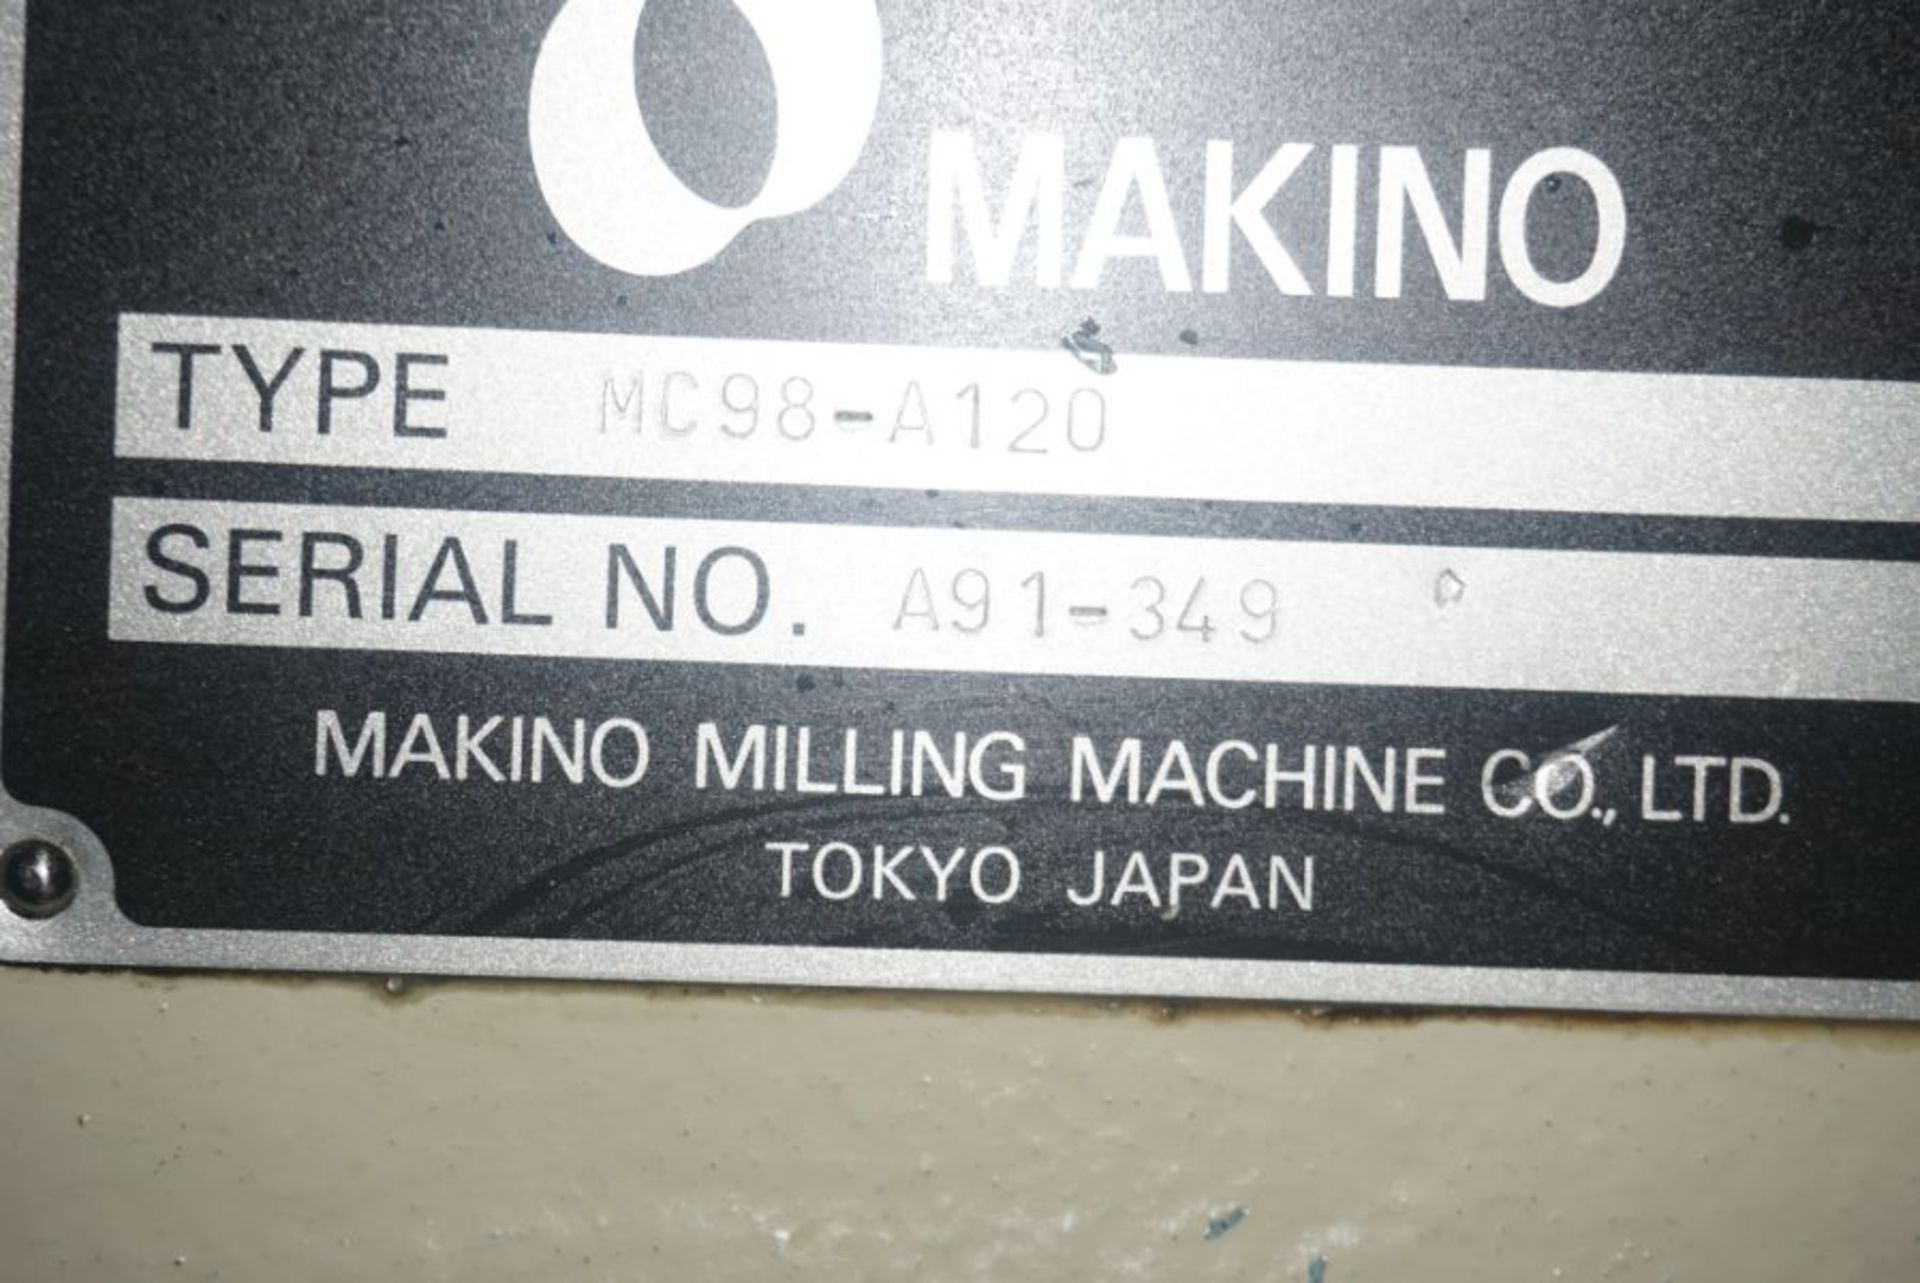 Makino MC98-A120 4-Axis Horizontal Machining Center, Fanuc 16 Pro 3 Control, New 1990 - Image 8 of 8